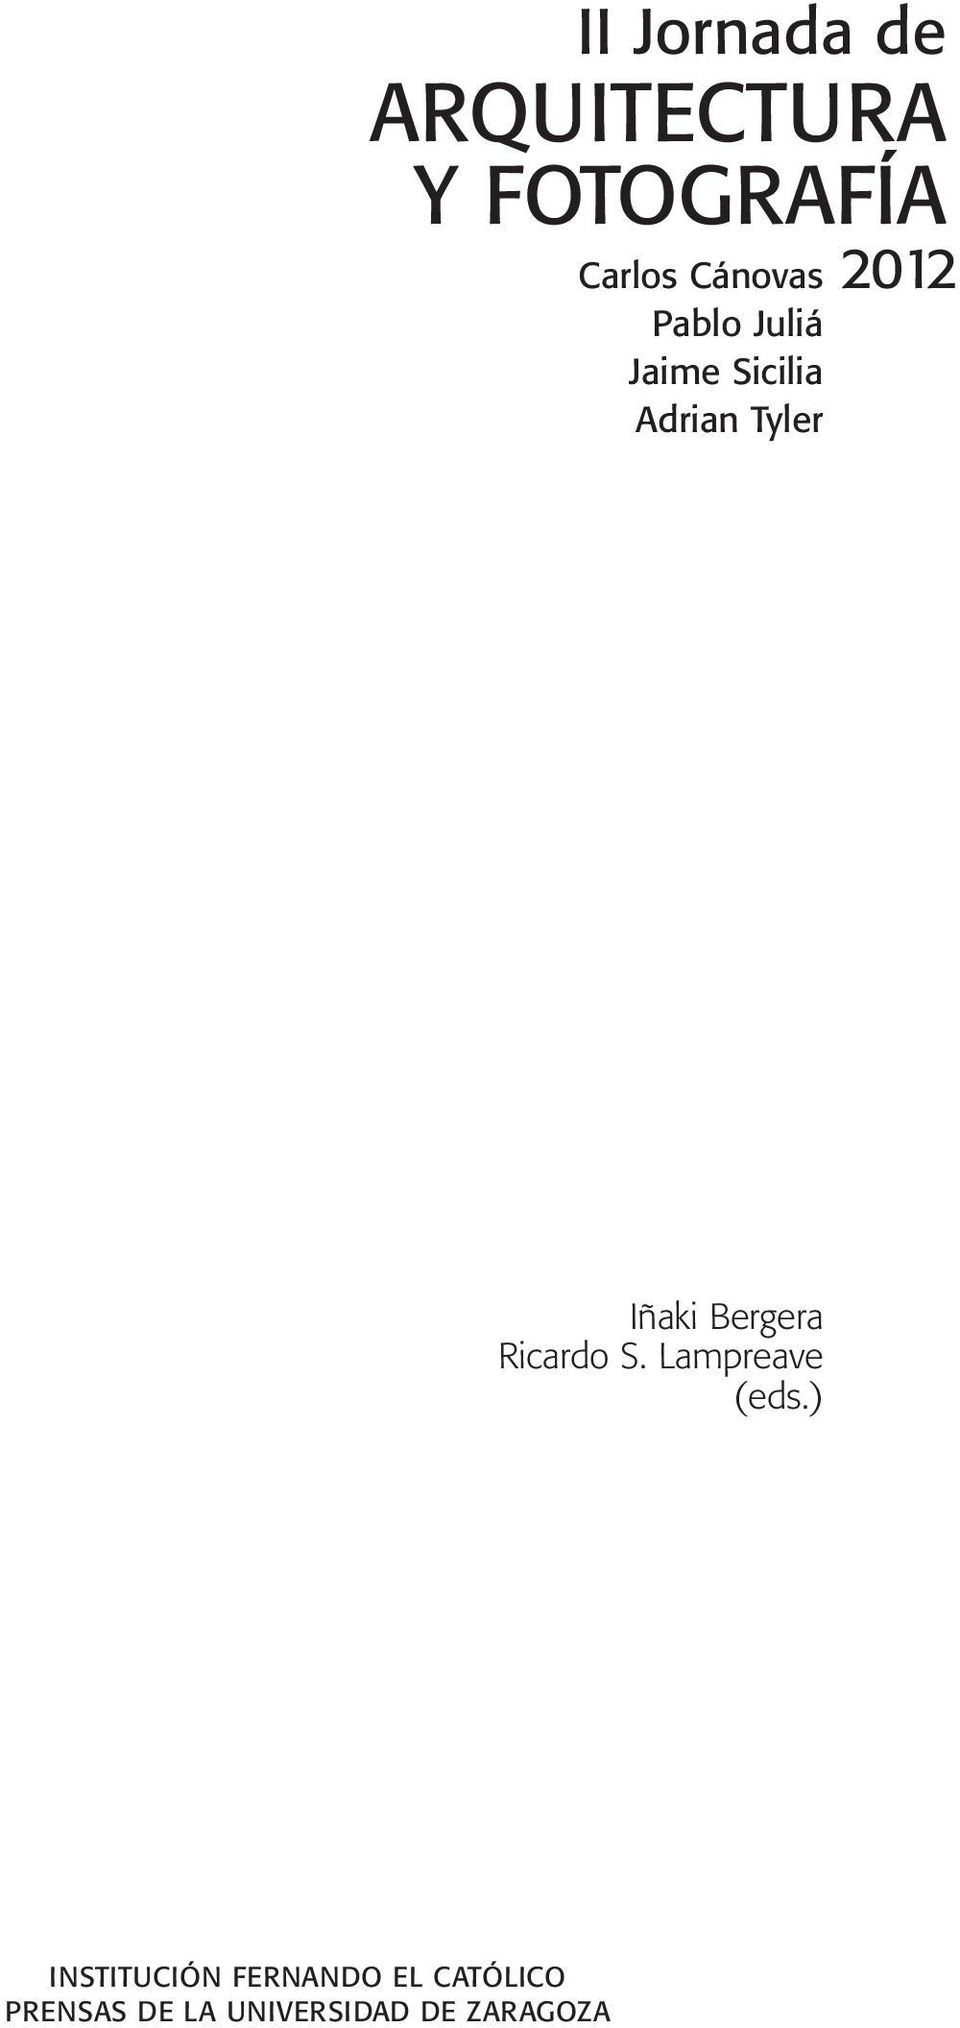 Iñaki Bergera Ricardo S. Lampreave (eds.